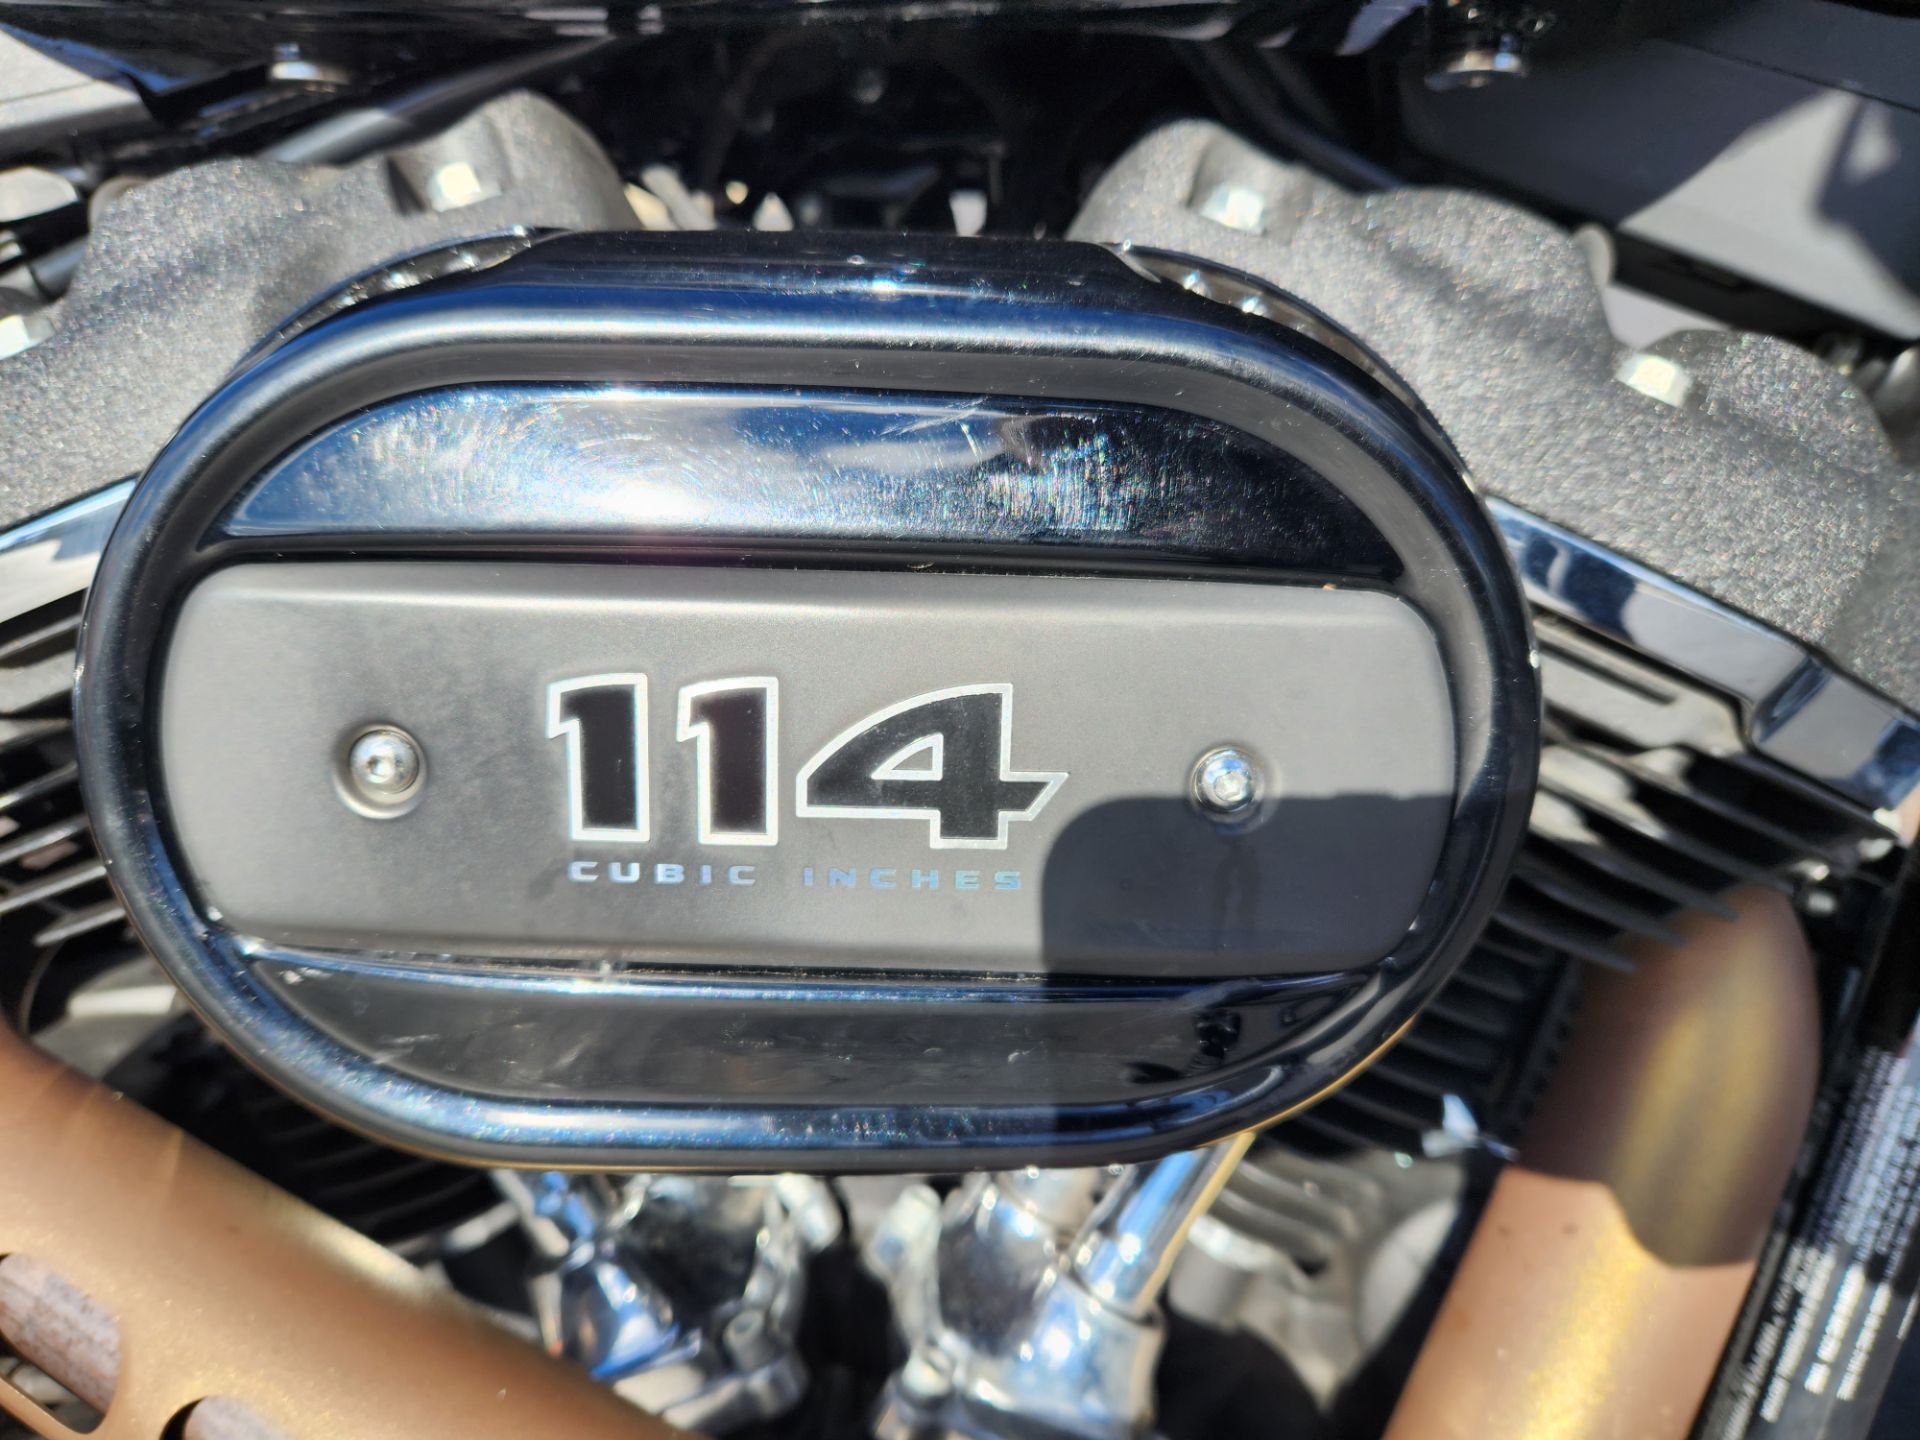 2021 Harley-Davidson Fat Bob® 114 in Lynchburg, Virginia - Photo 25